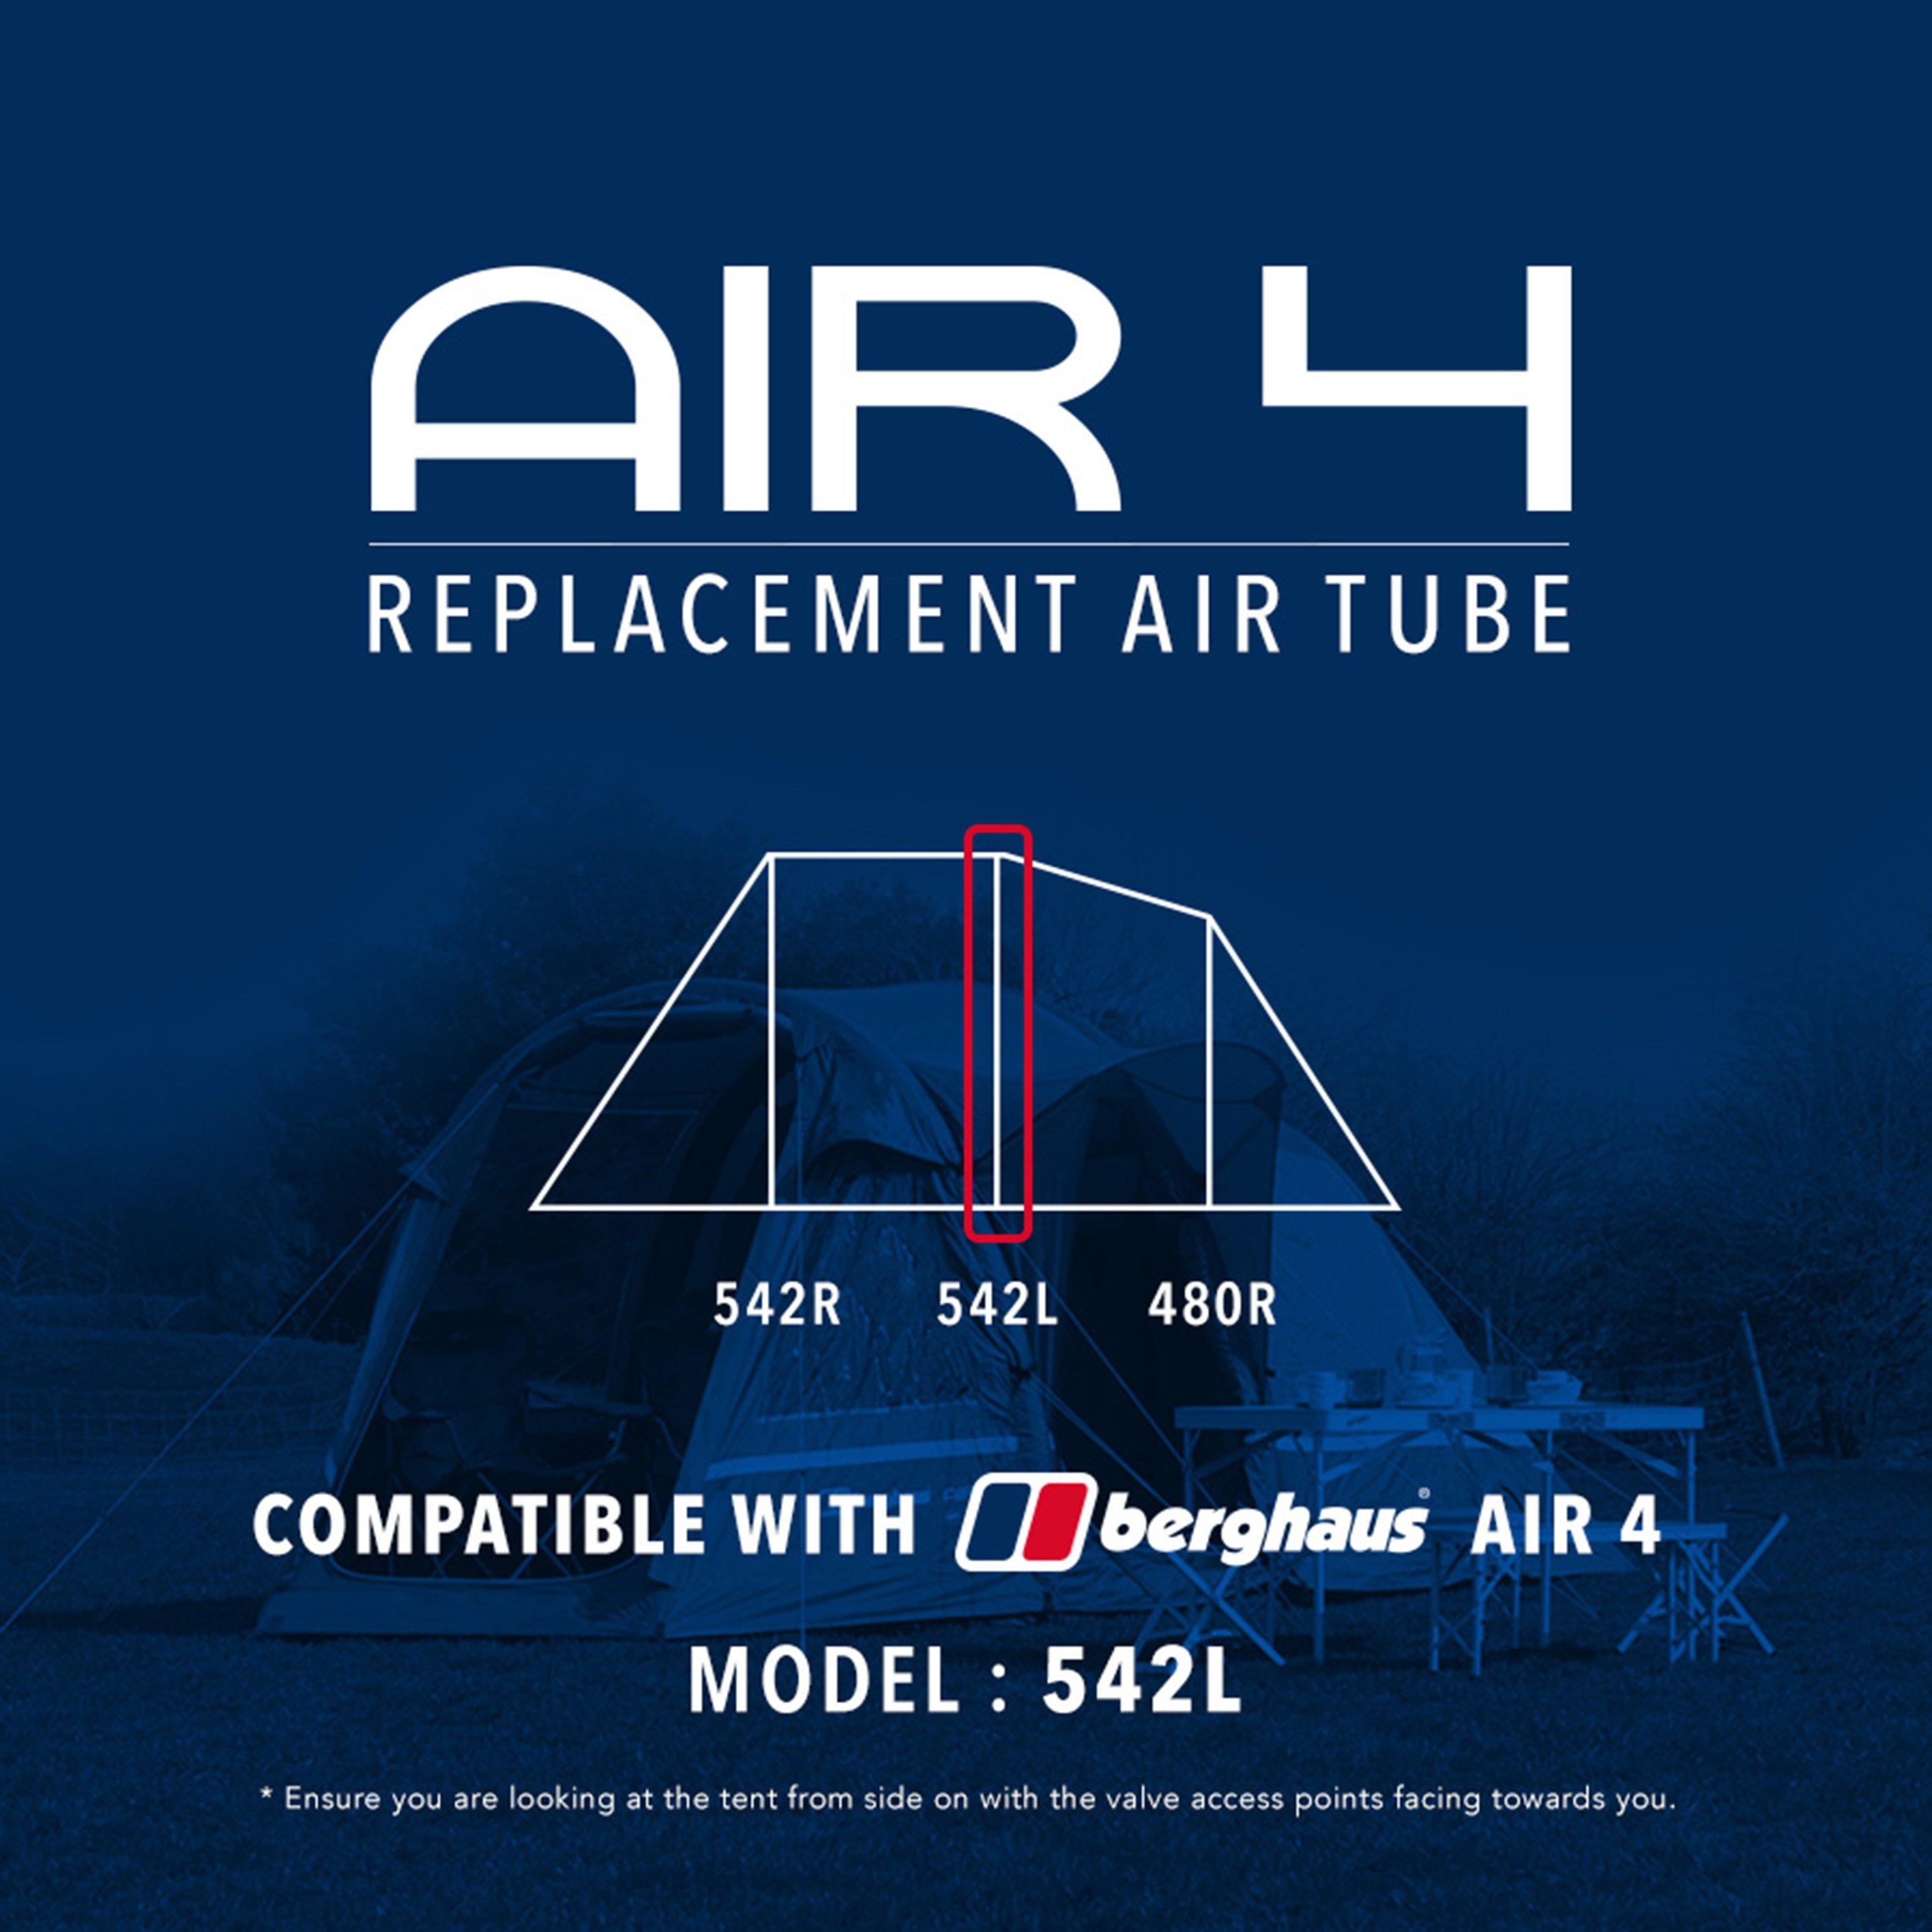 Berghaus Air 4 tent – replacement air tubes